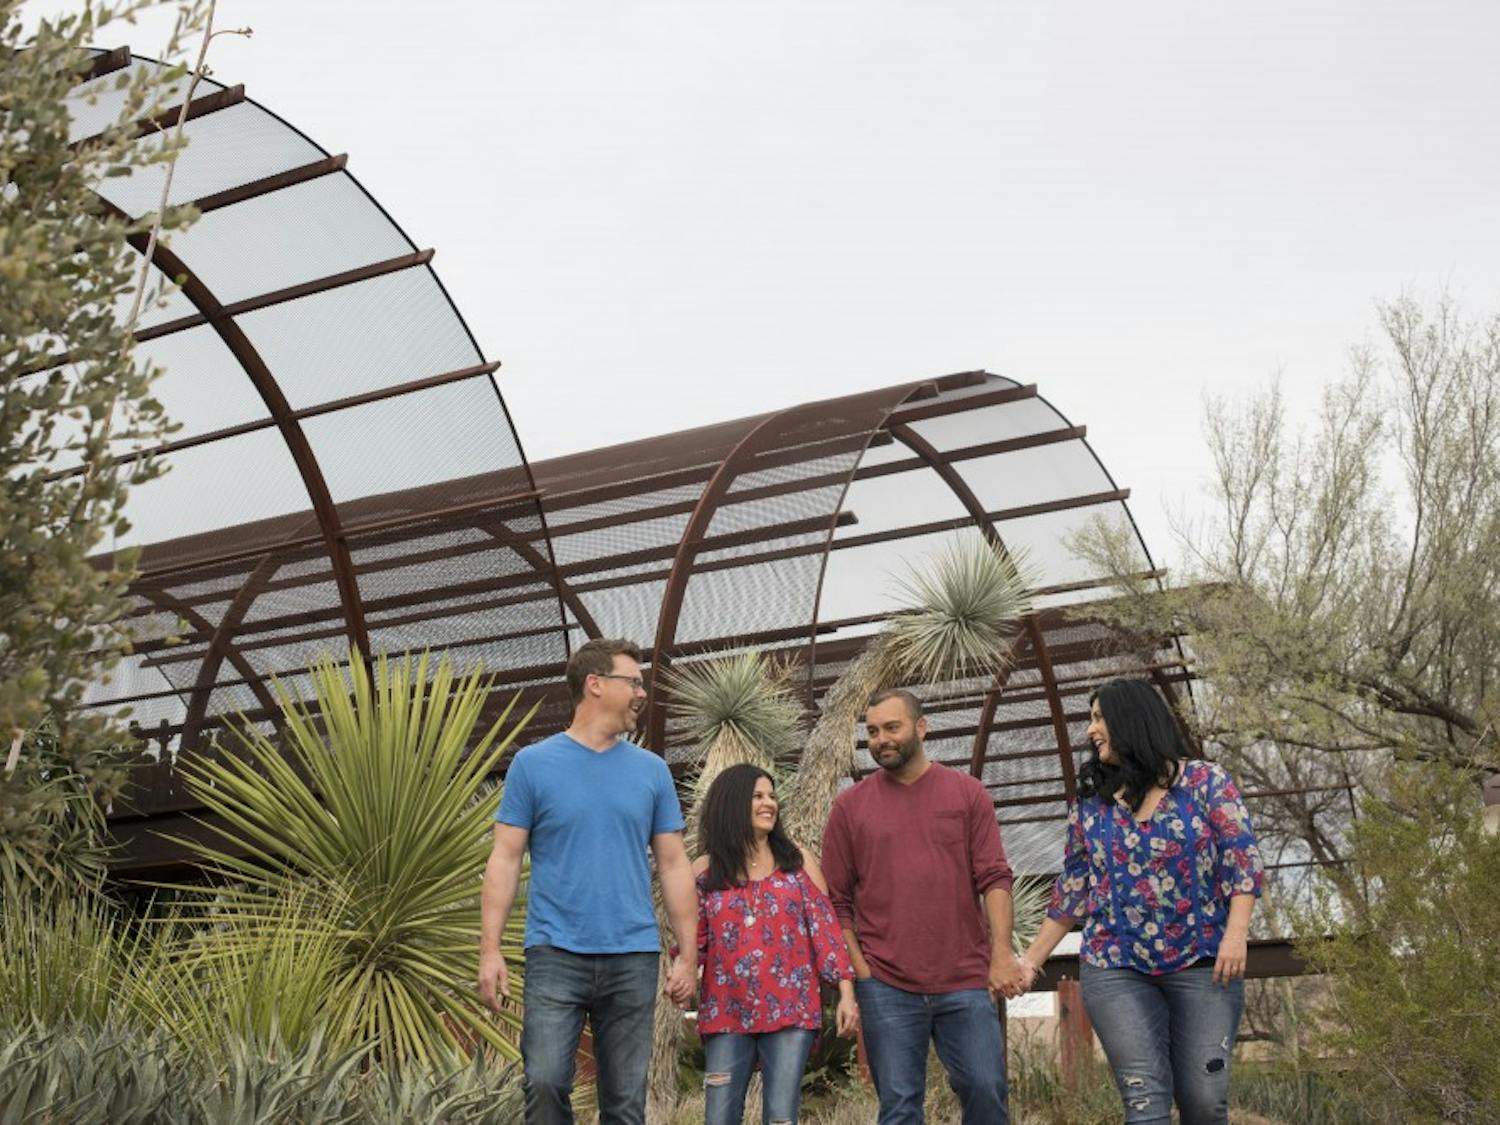 Visitors enjoy the Desert Botanical Garden located off Galvin Parkway in Phoenix, Arizona.